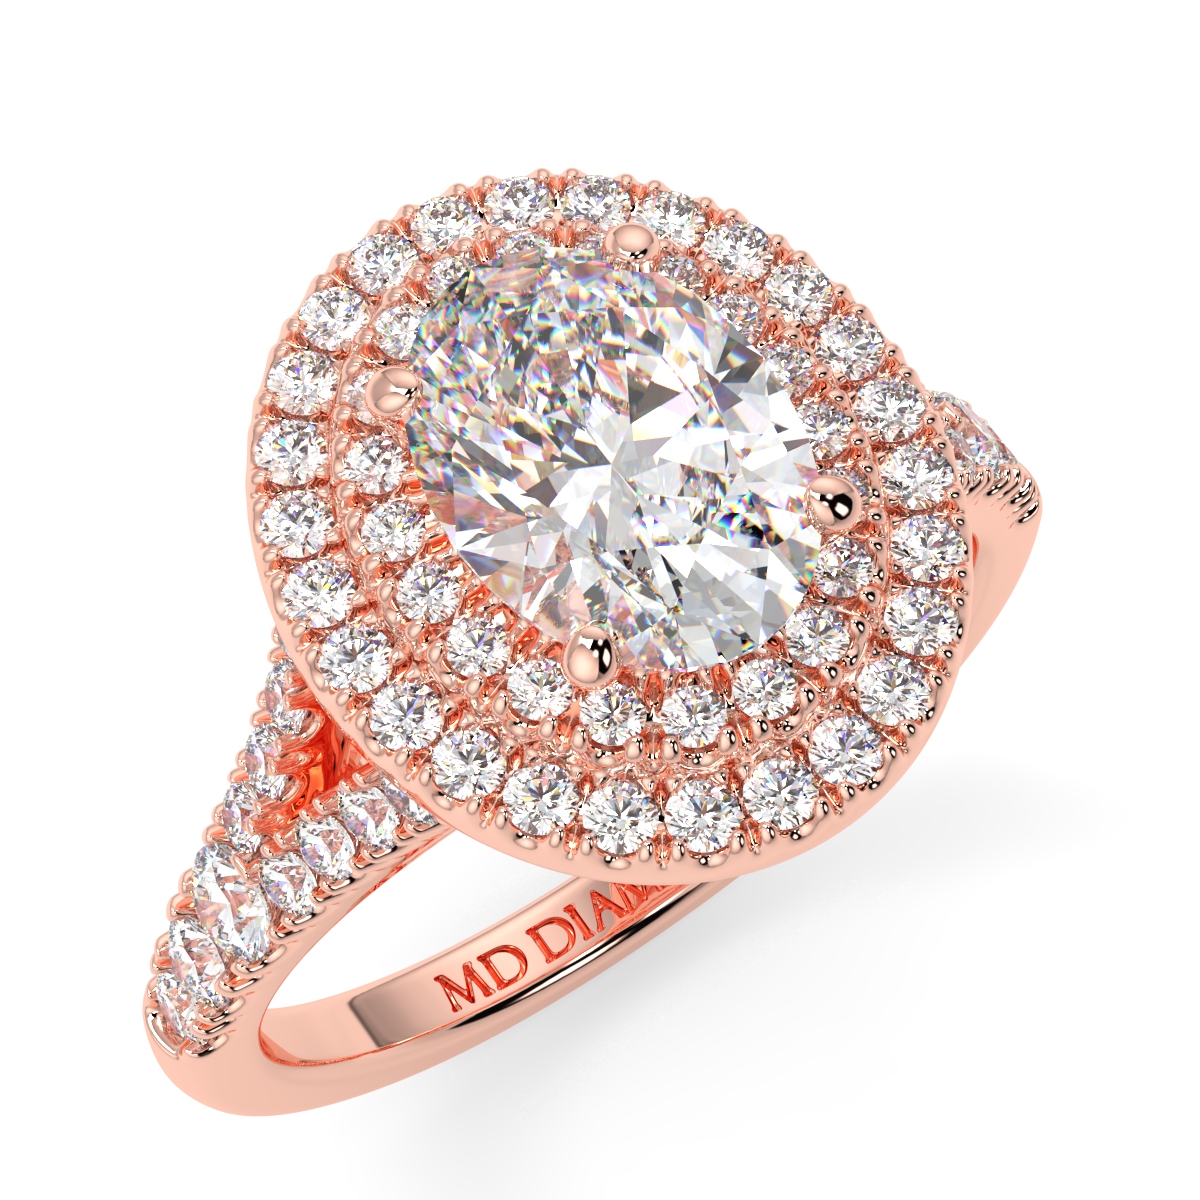 Oval Microset Double Halo Diamond Ring